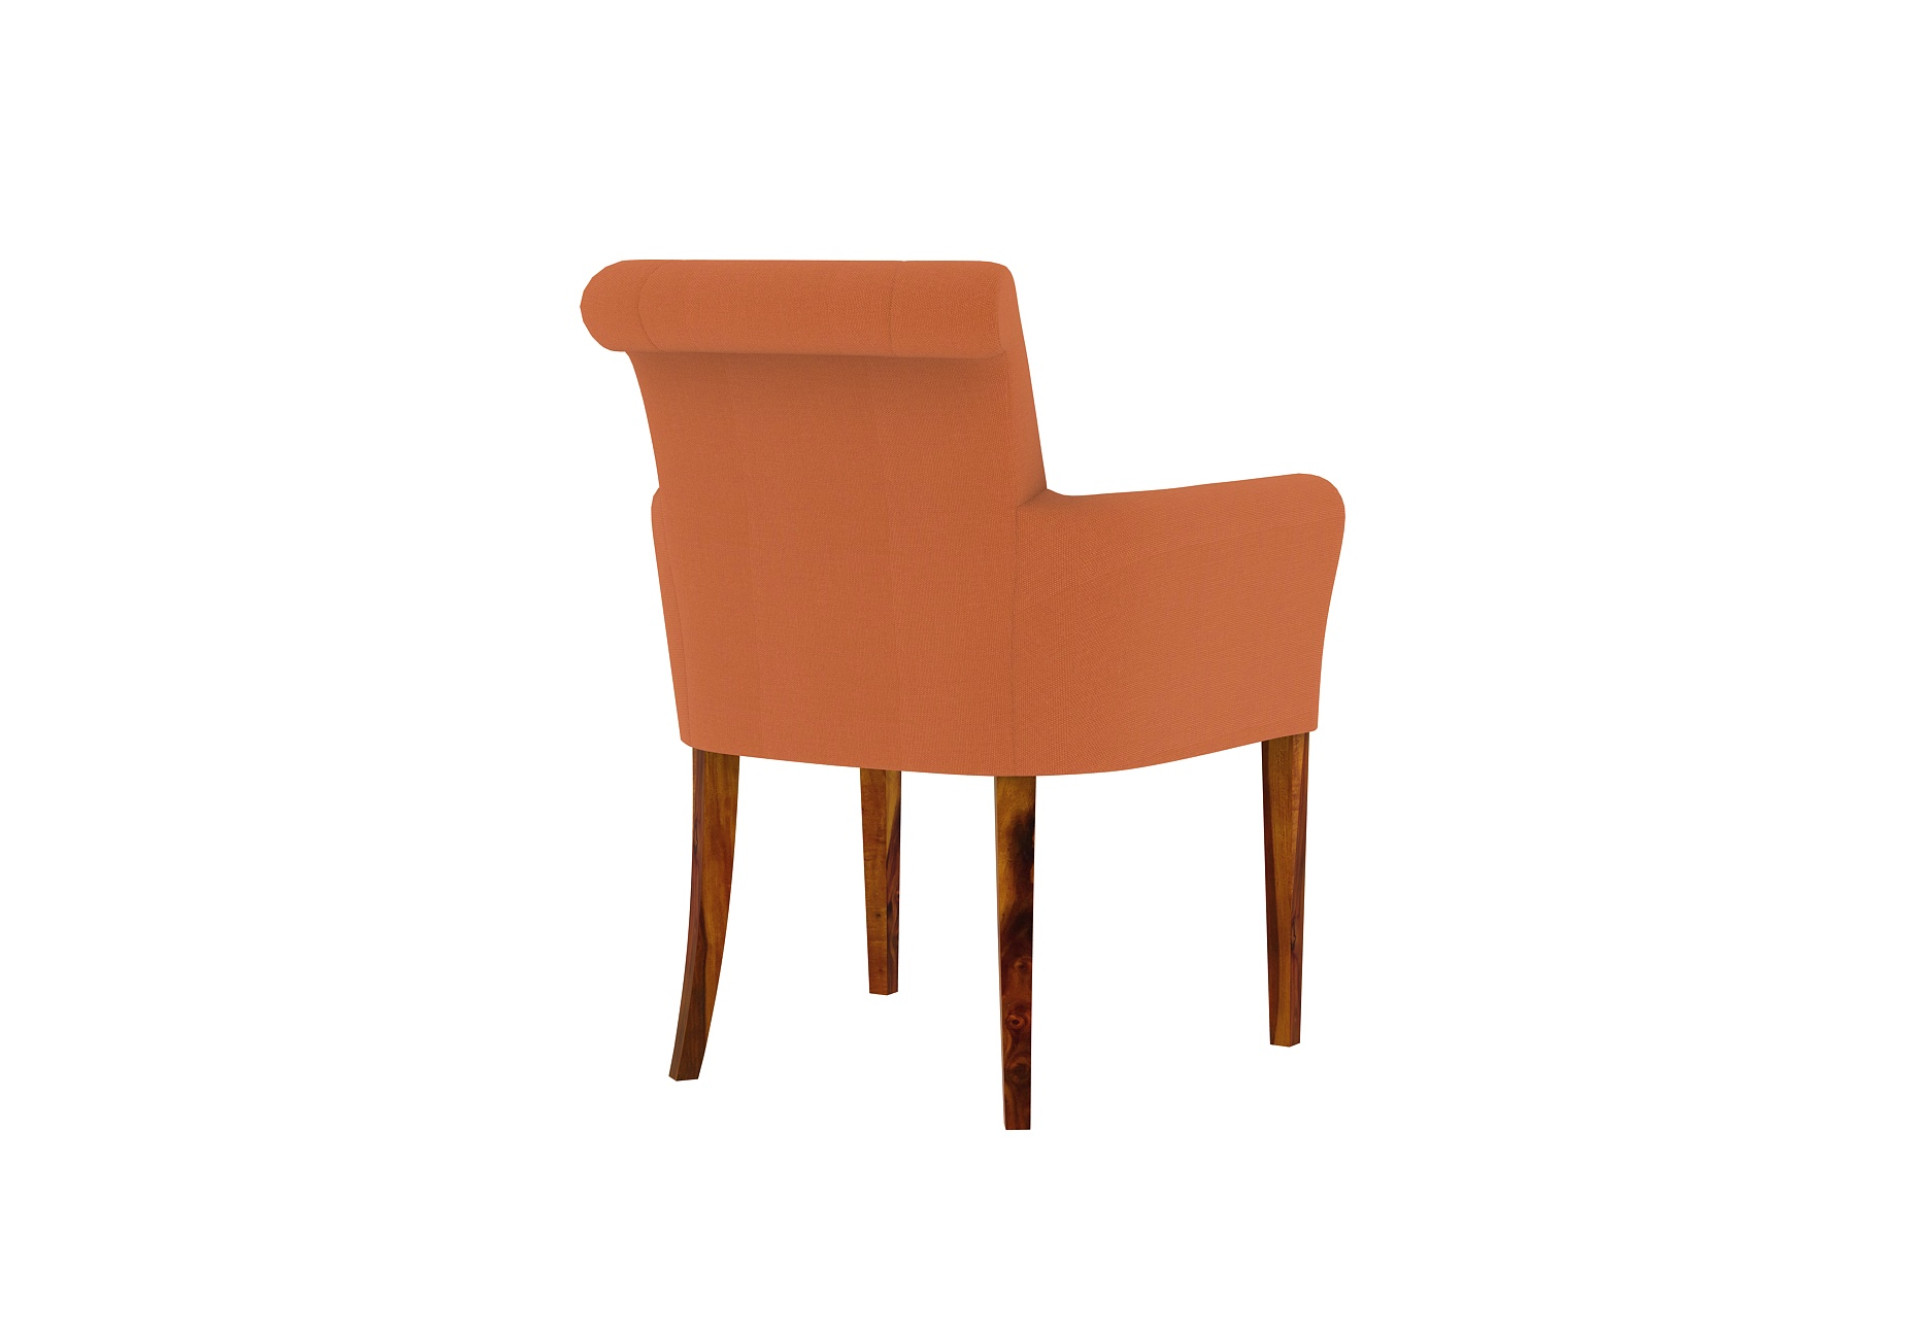 Urban Dining Chair - Set Of 2 (Cotton, Diana Orange)